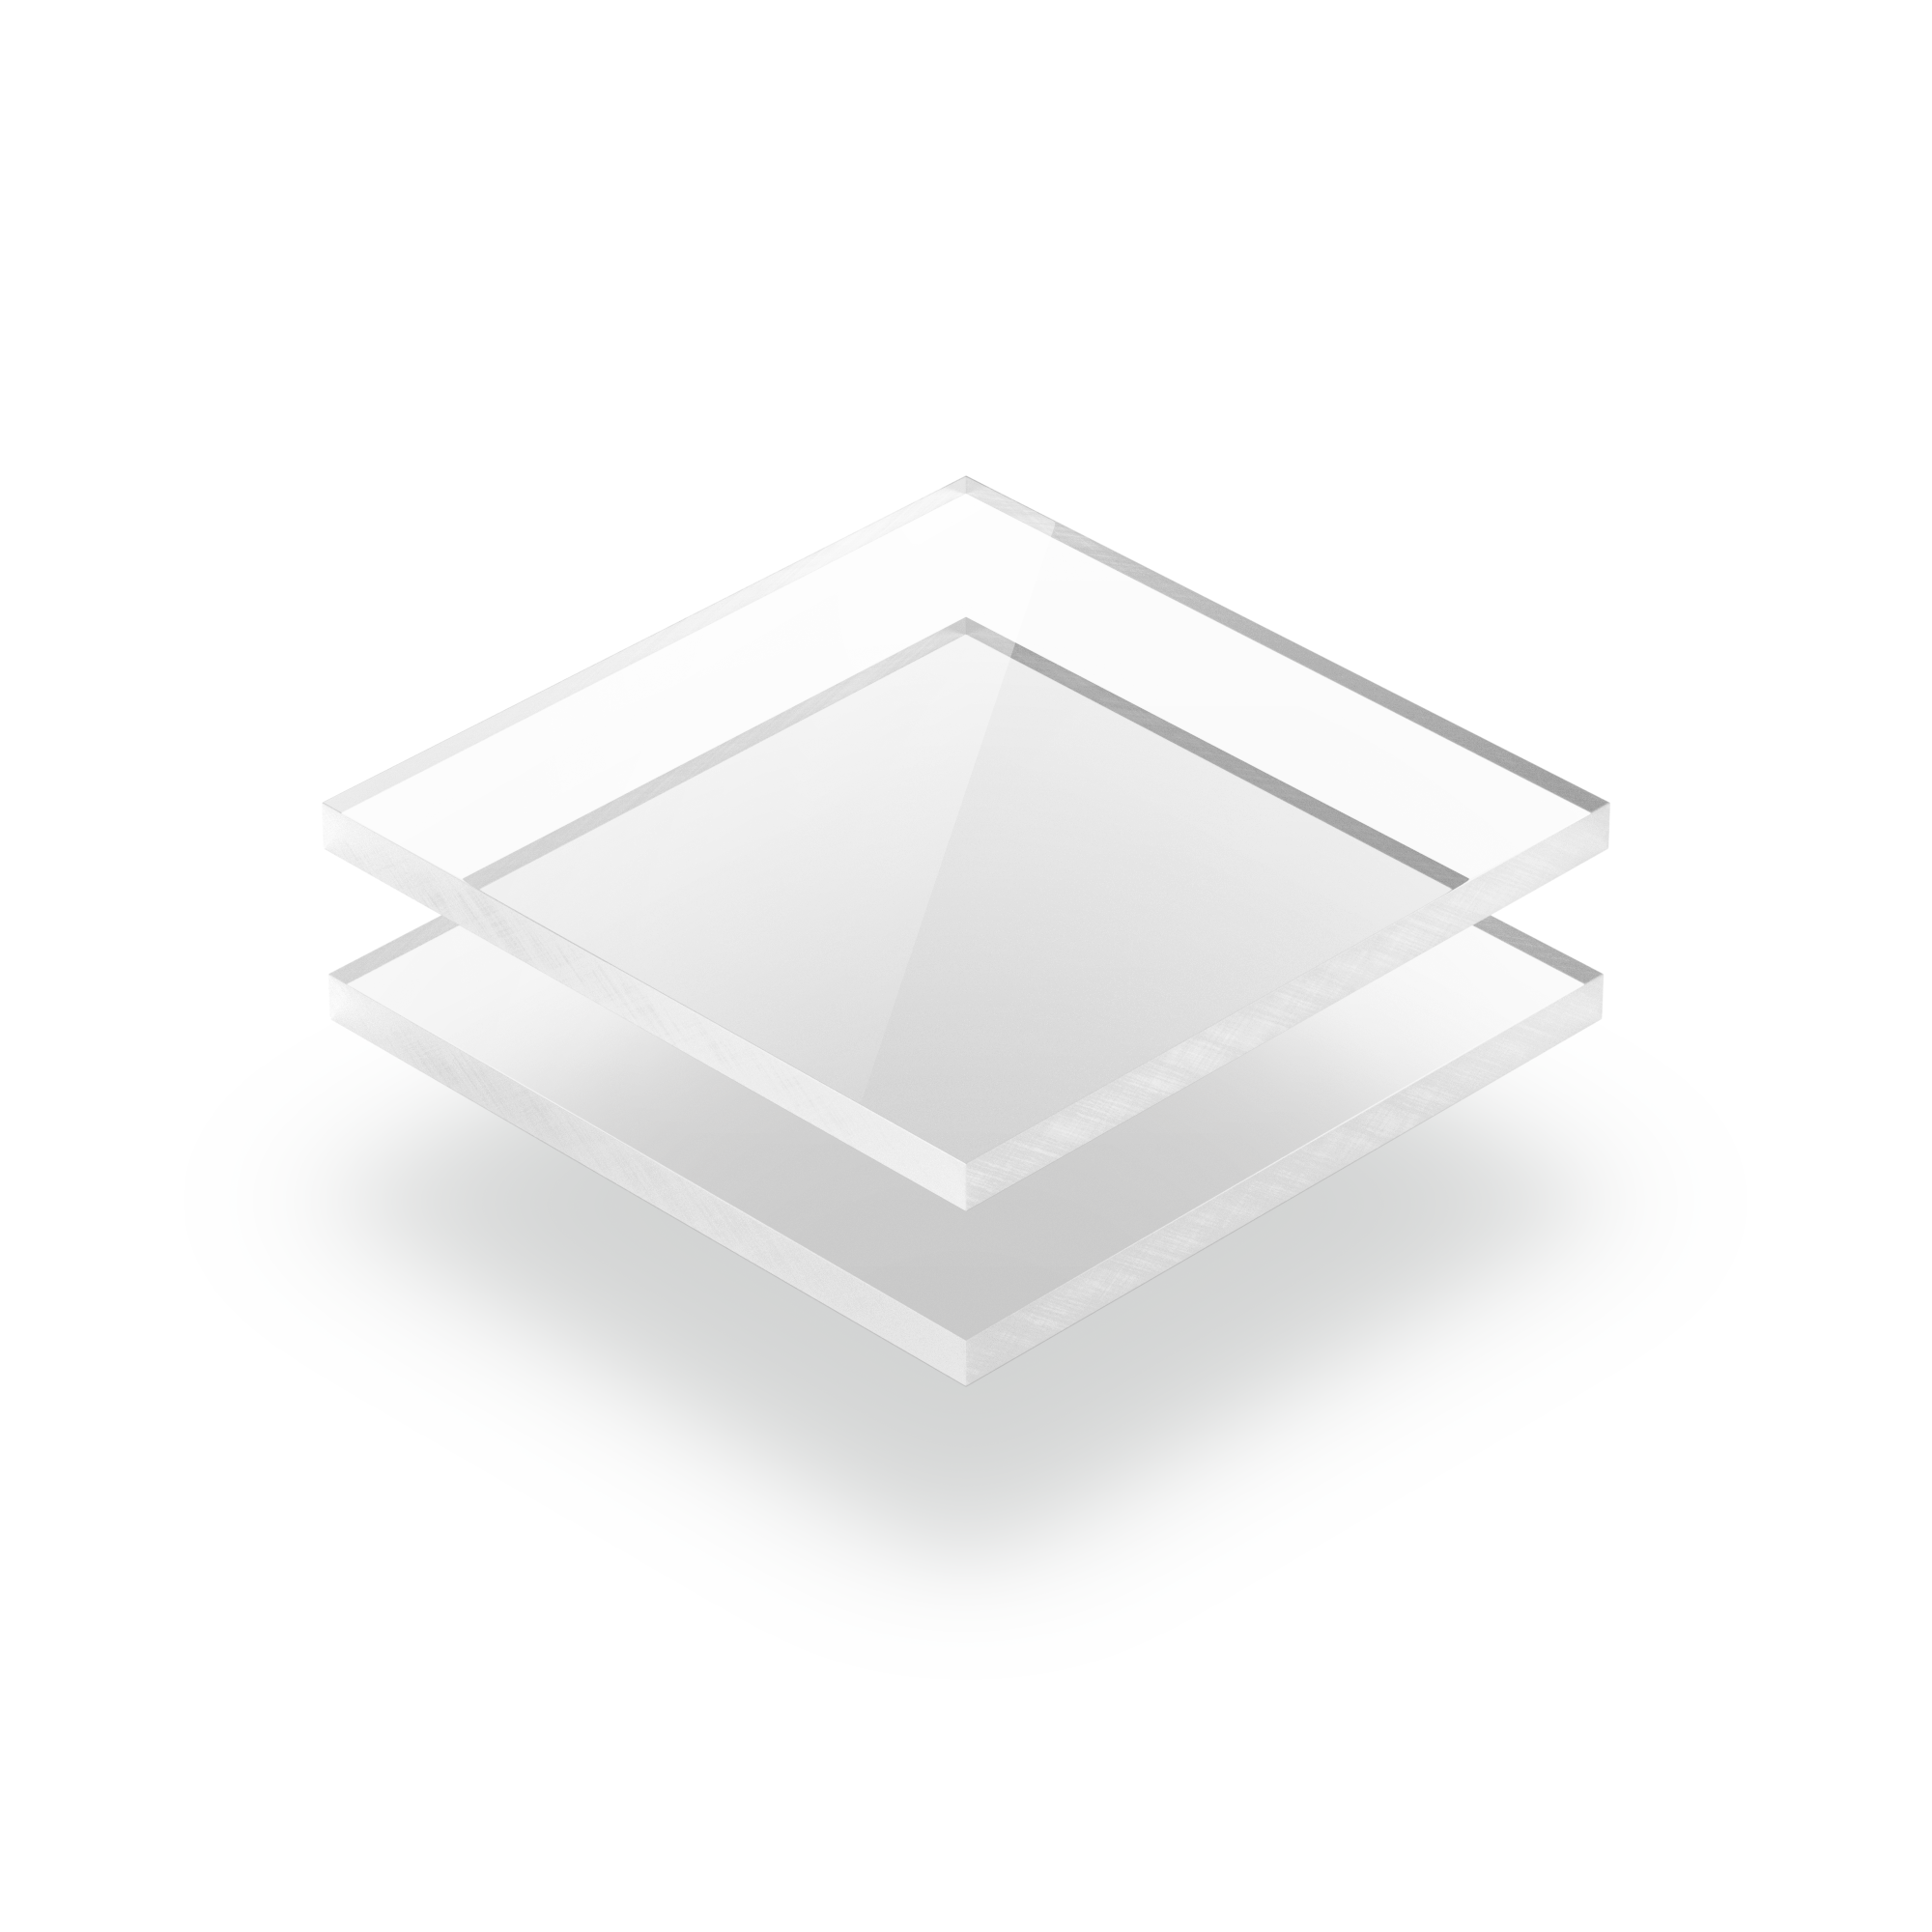 Platte Acrylglas XT Zuschnitt transparent klar 1000 x 600 x 5 mm SONDERPREIS 